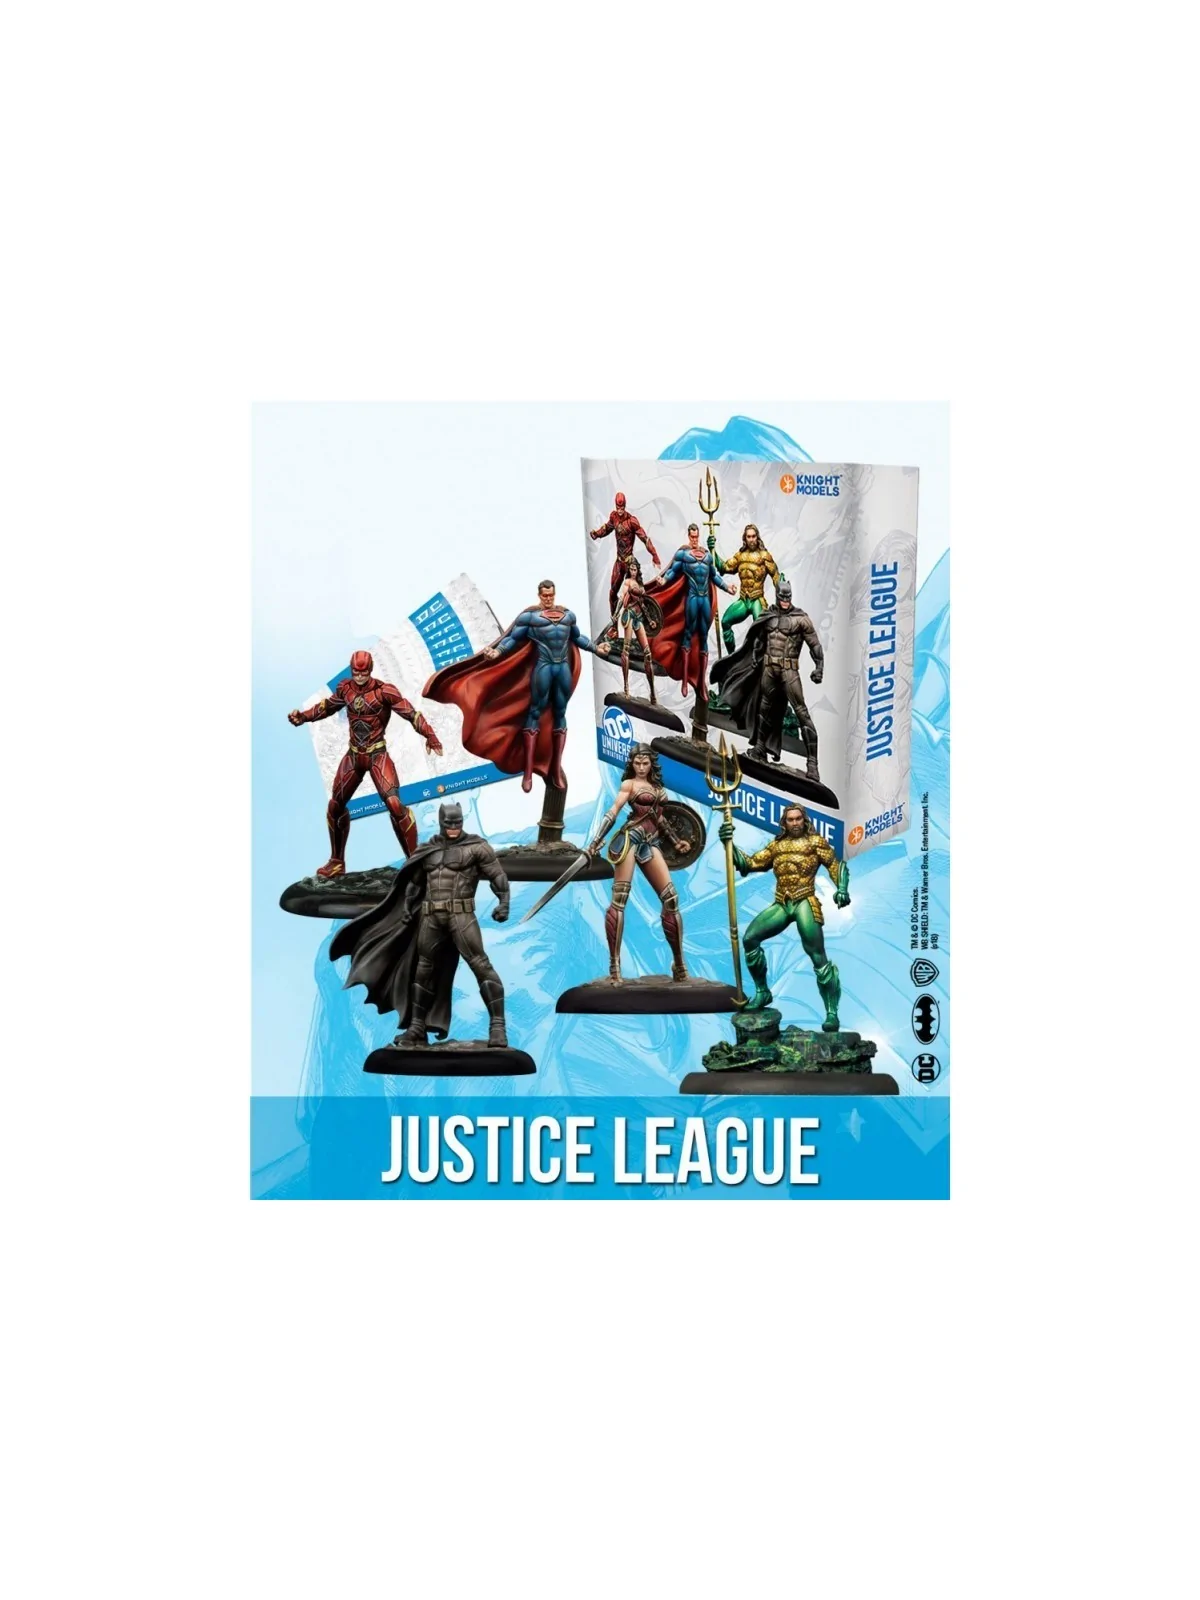 Comprar DC Universe Miniature Game: Liga de la Justicia barato al mejo